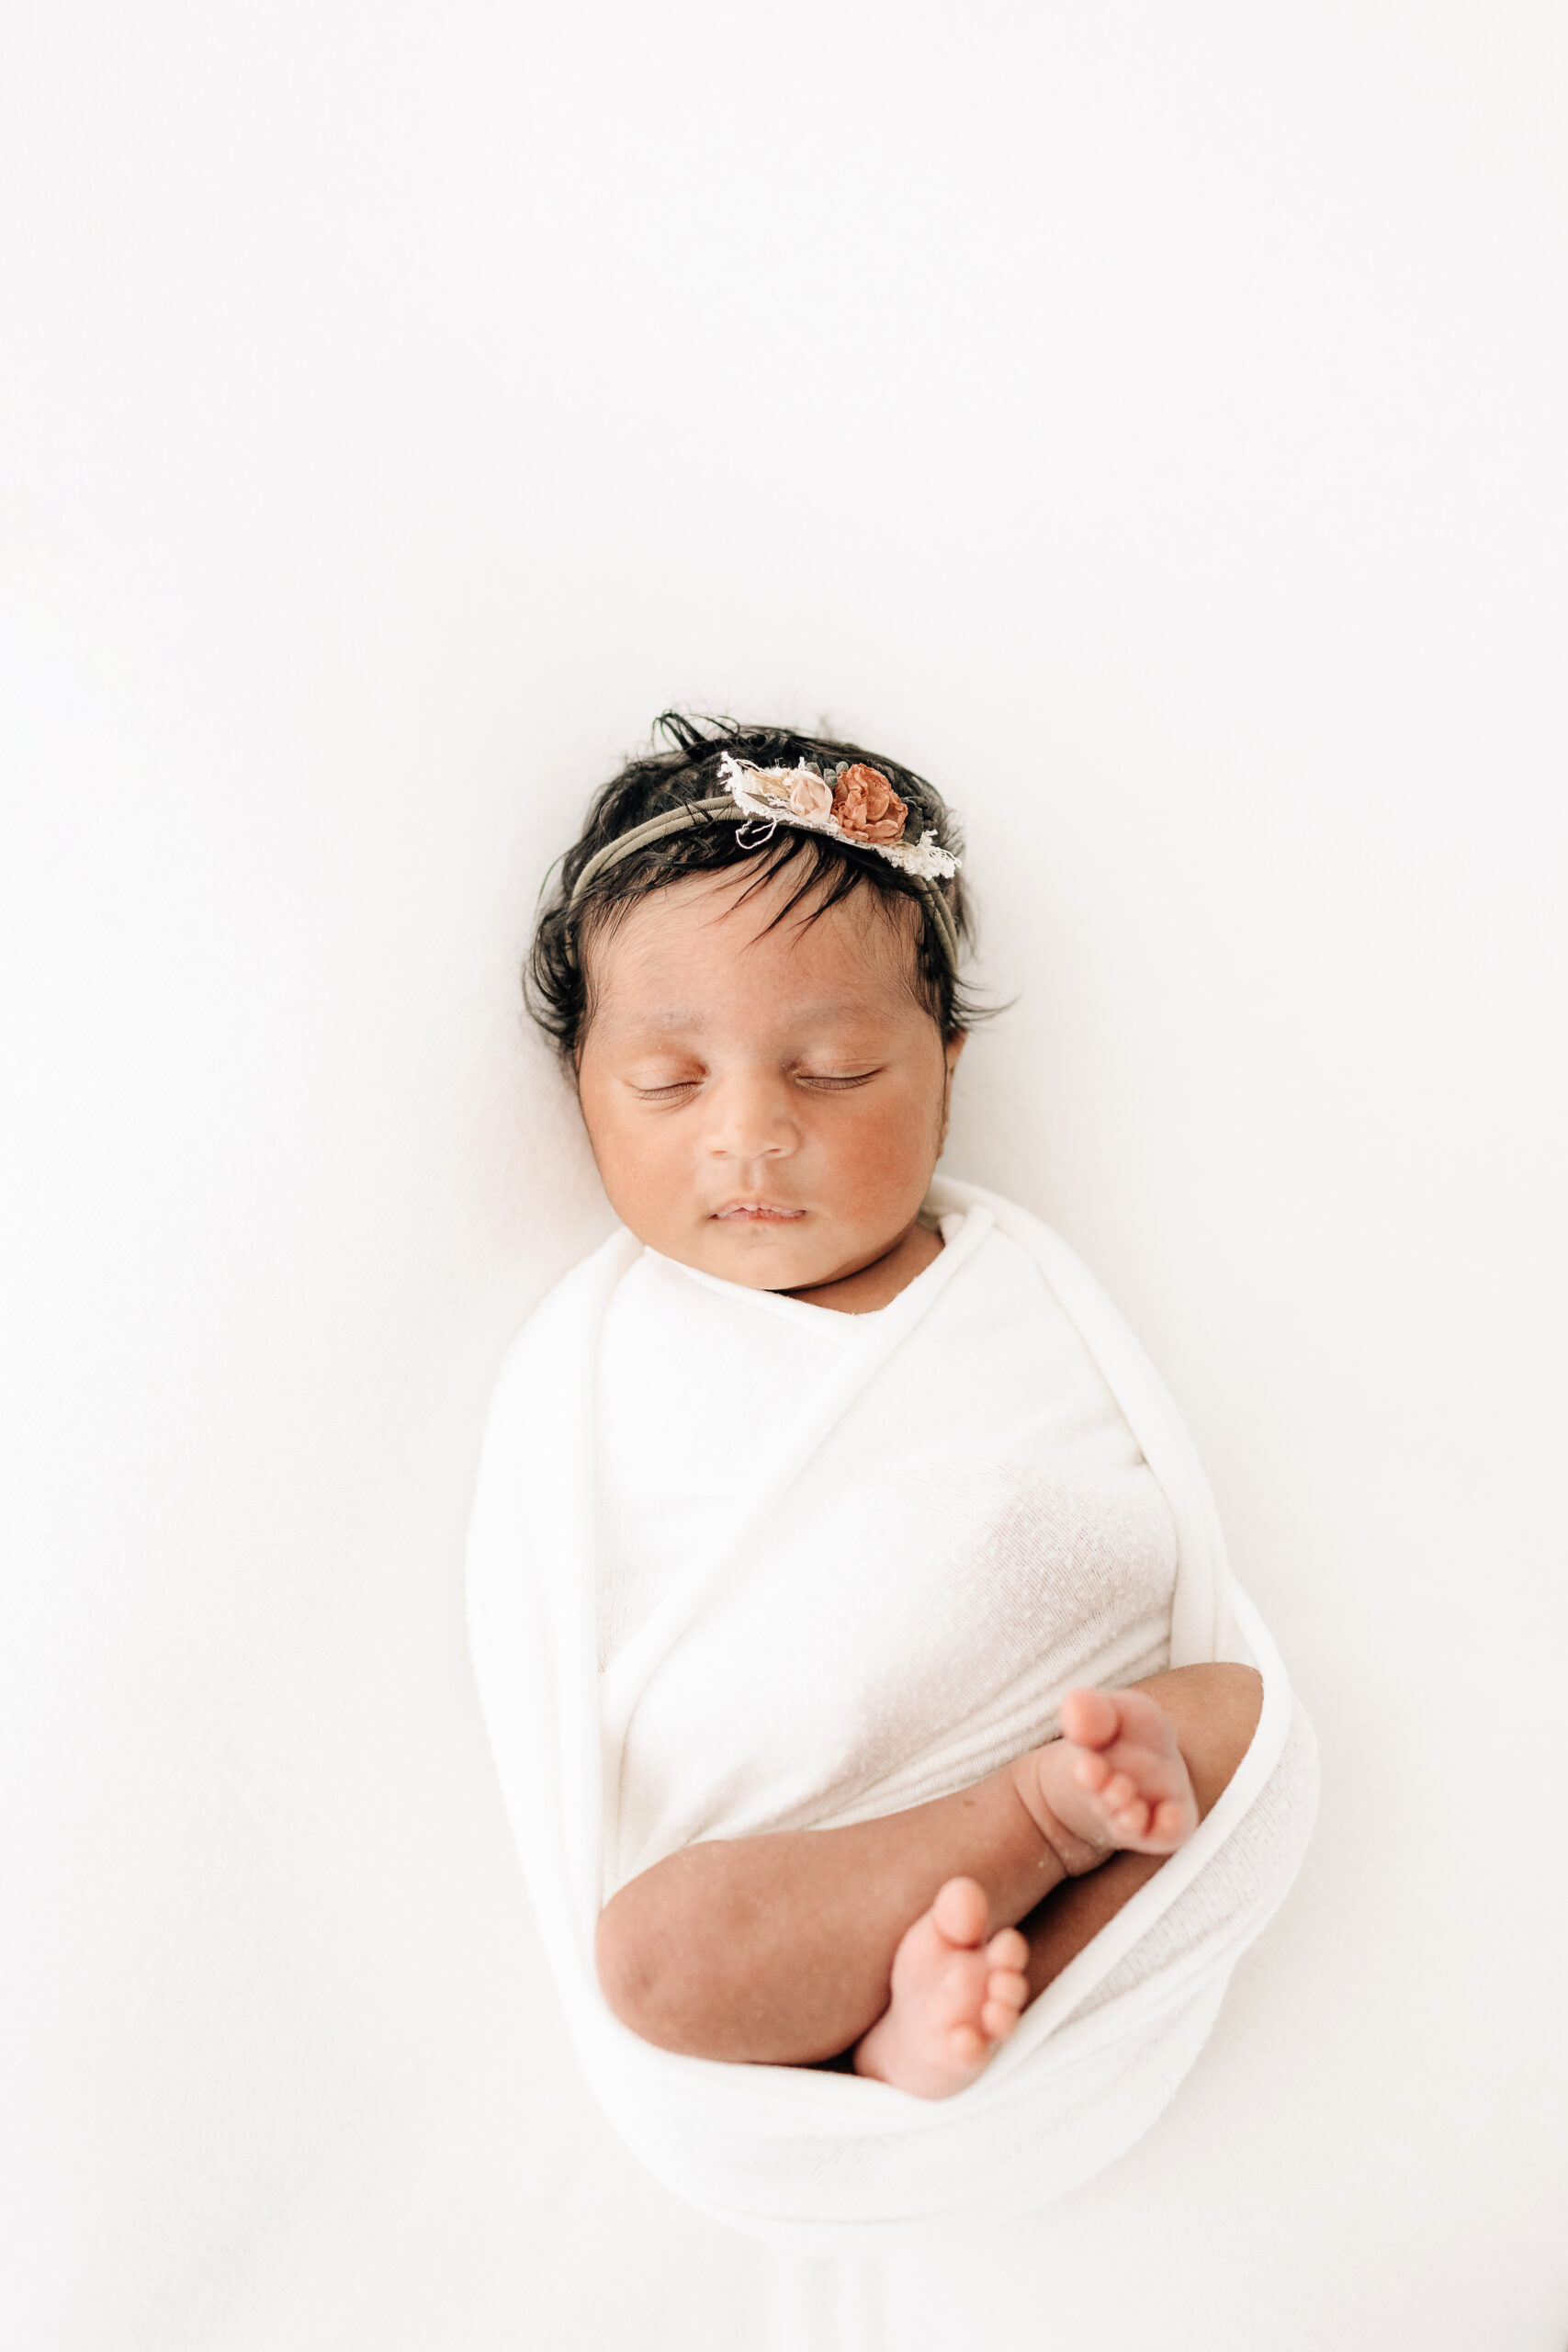 newborn baby girl swaddled in white